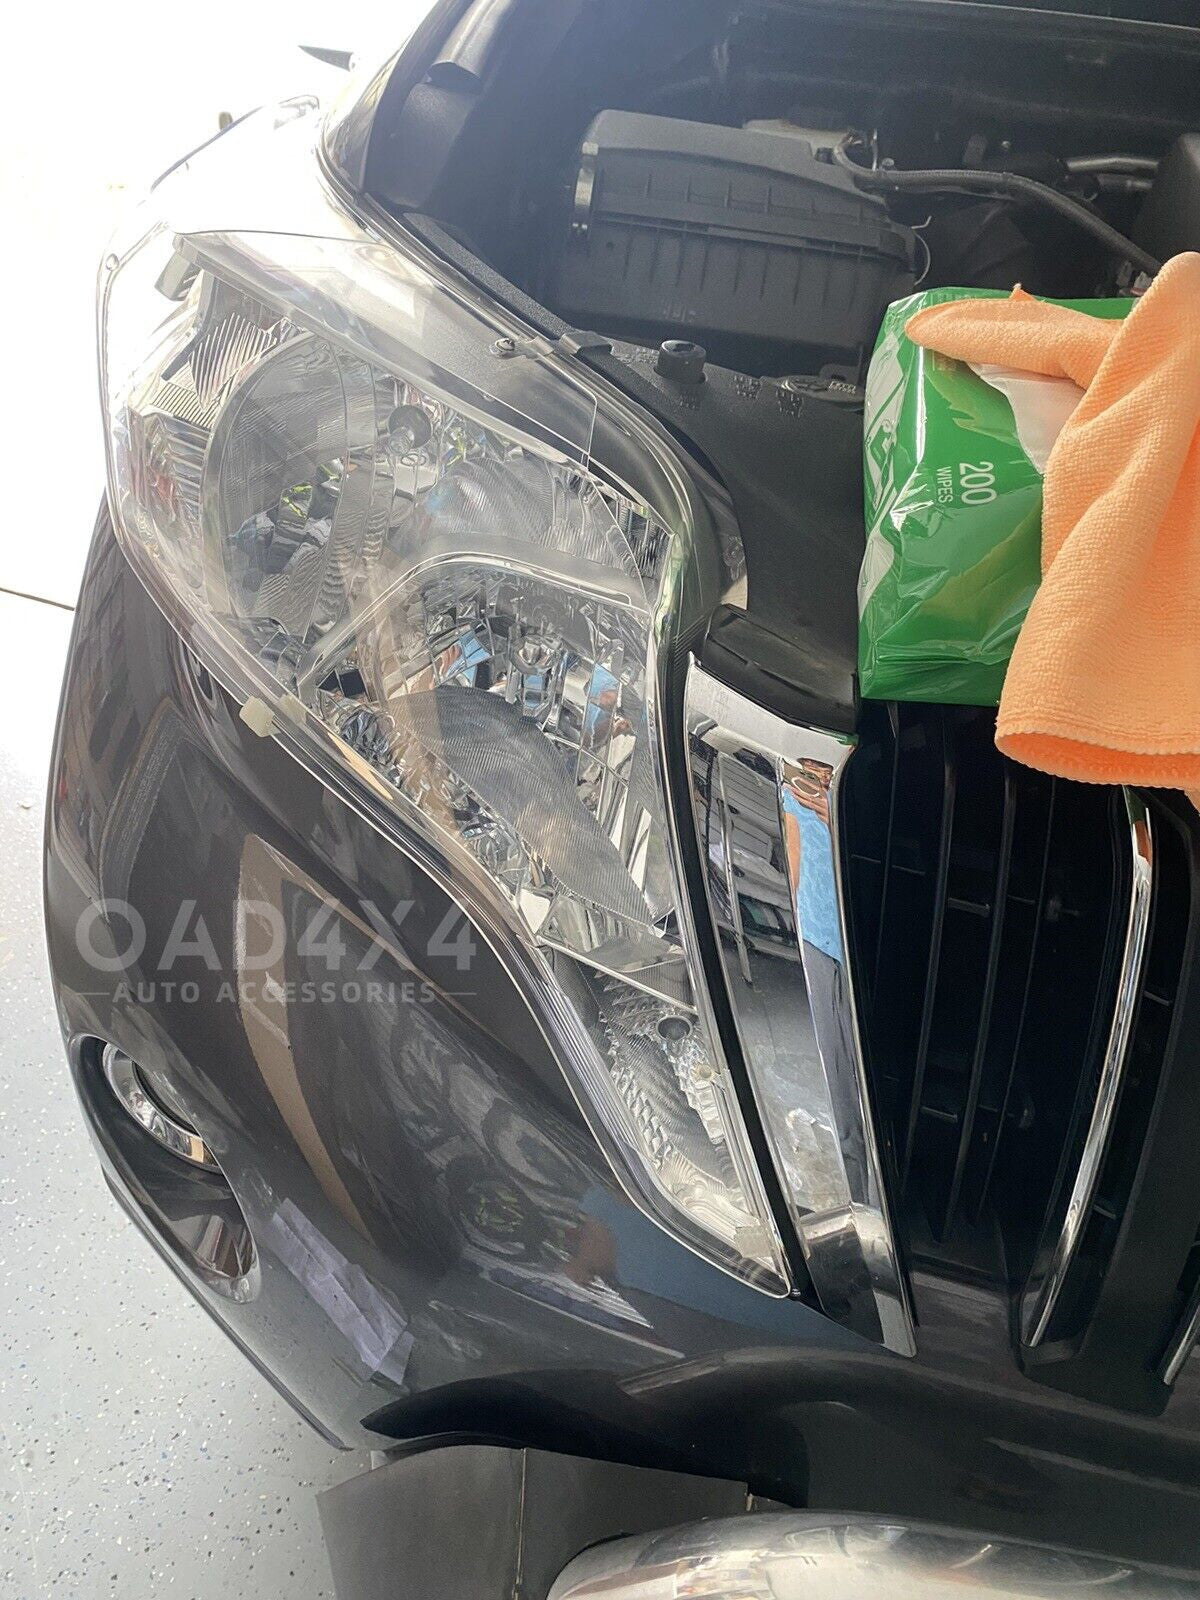 Lamp Covers for Toyota Land Cruiser Prado 150 2013-2015 Headlight Headlamp Protectors